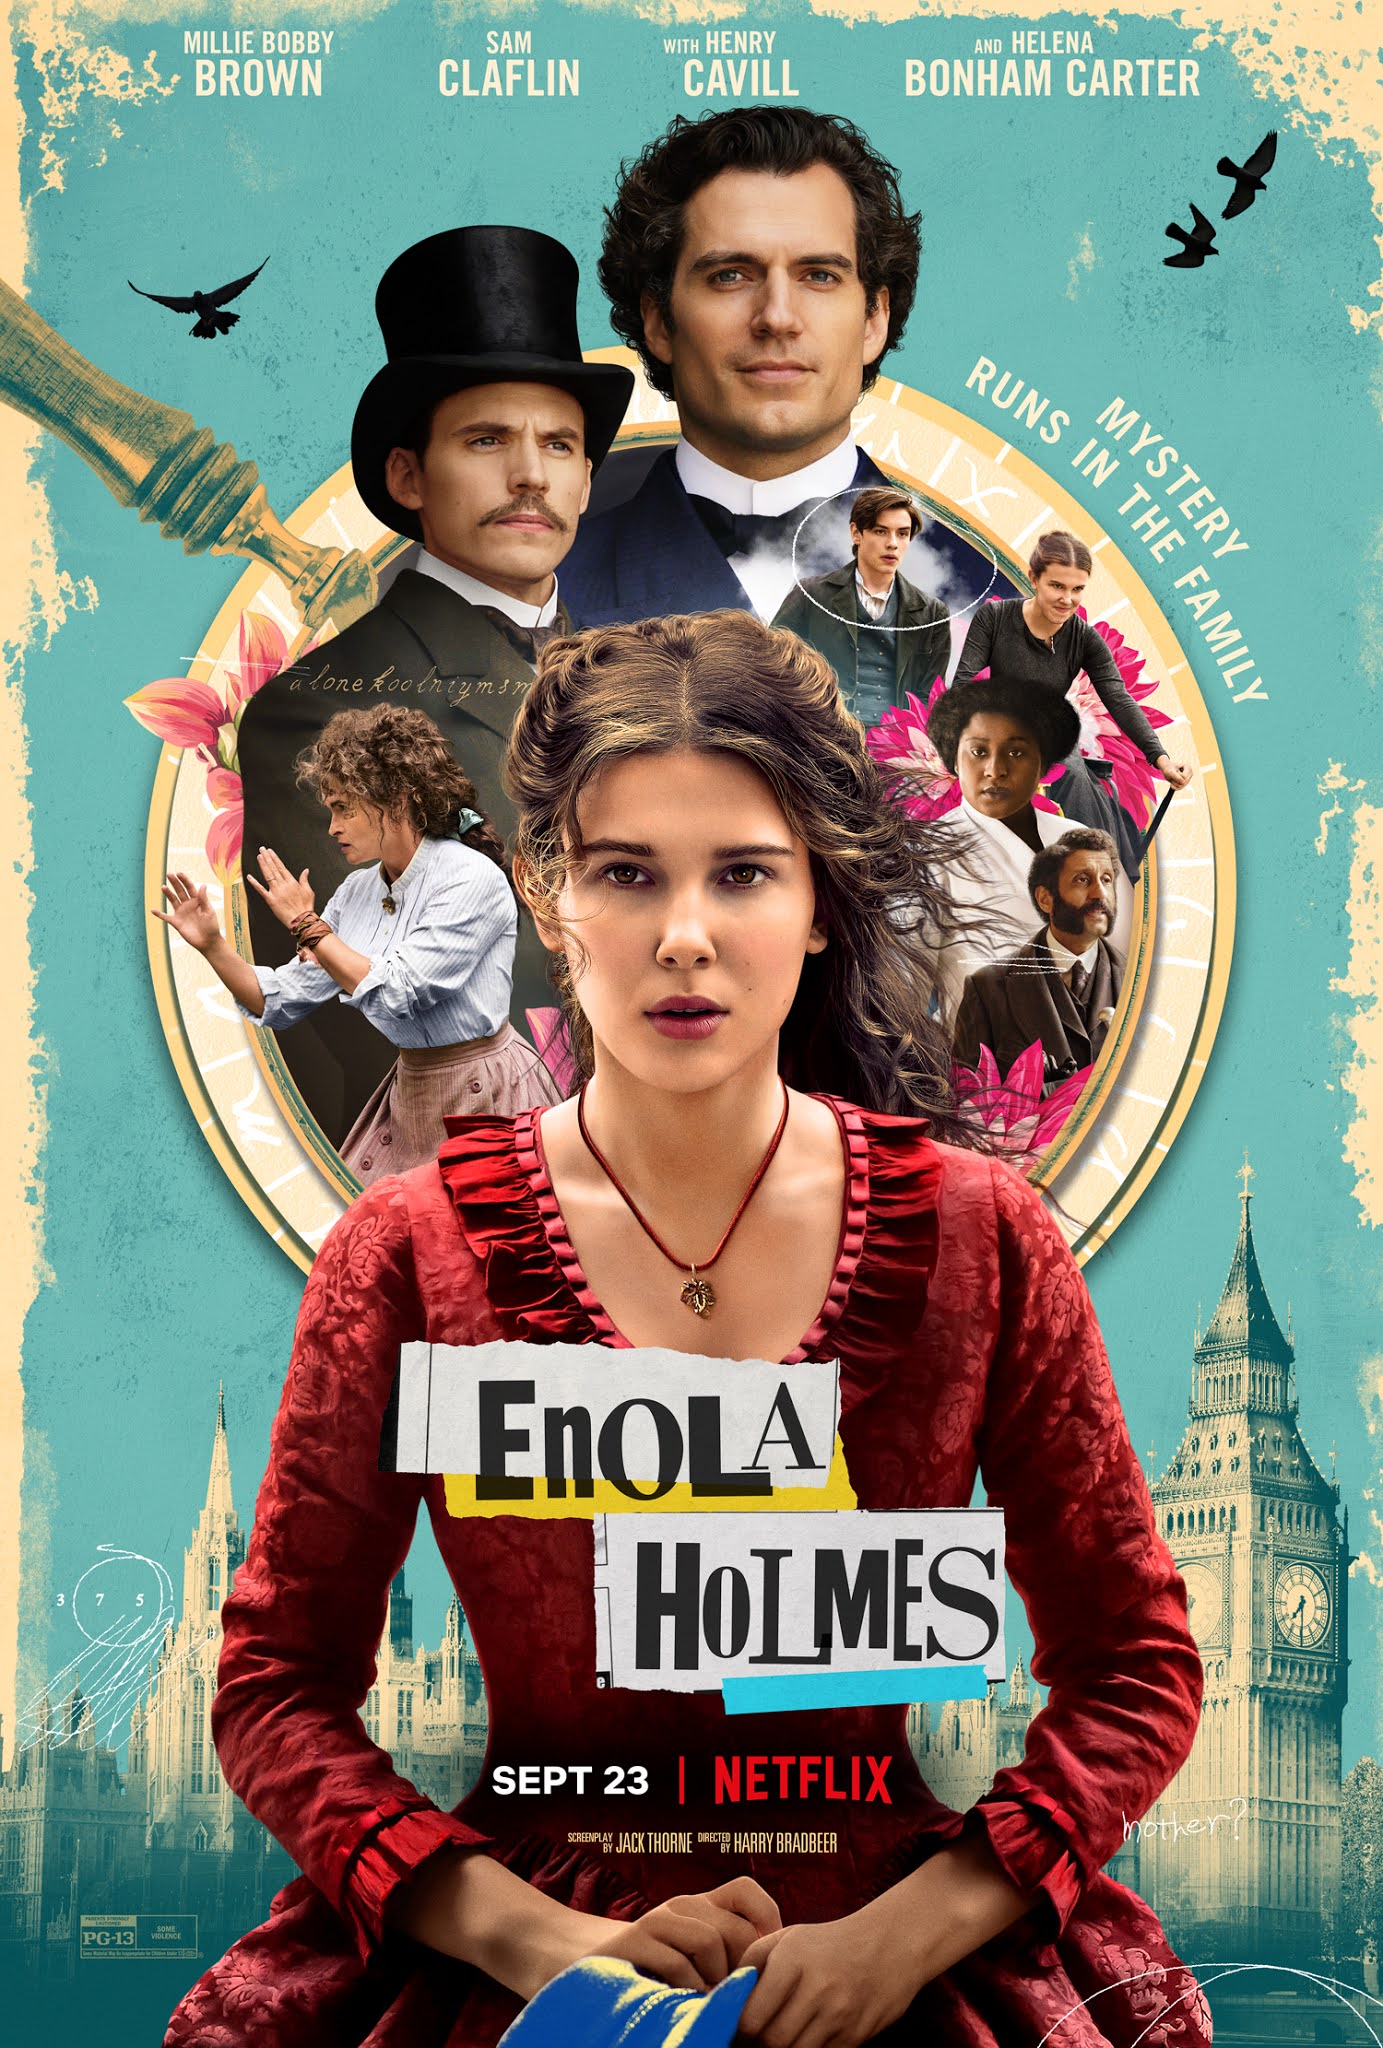 Millie Bobby Brown's 'Enola Holmes' co-star Louis Partridge hasn't